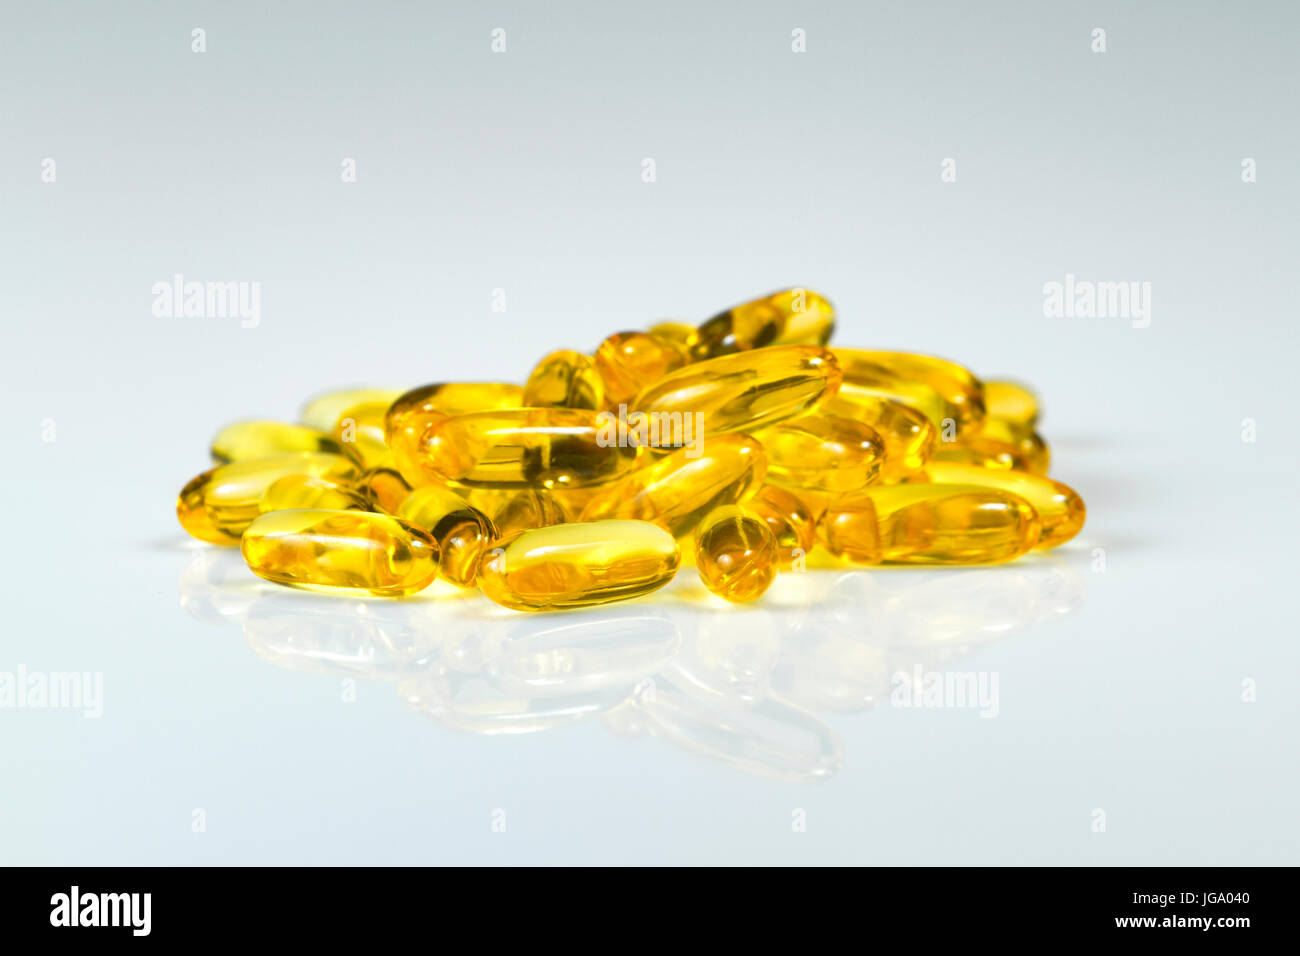 Cápsulas de aceite de pescado de omega 3. Cerrar cápsulas de aceite de pescado sobre fondo blanco. El suplemento de alta vitamina E y omega 3 DHA. Foto de stock